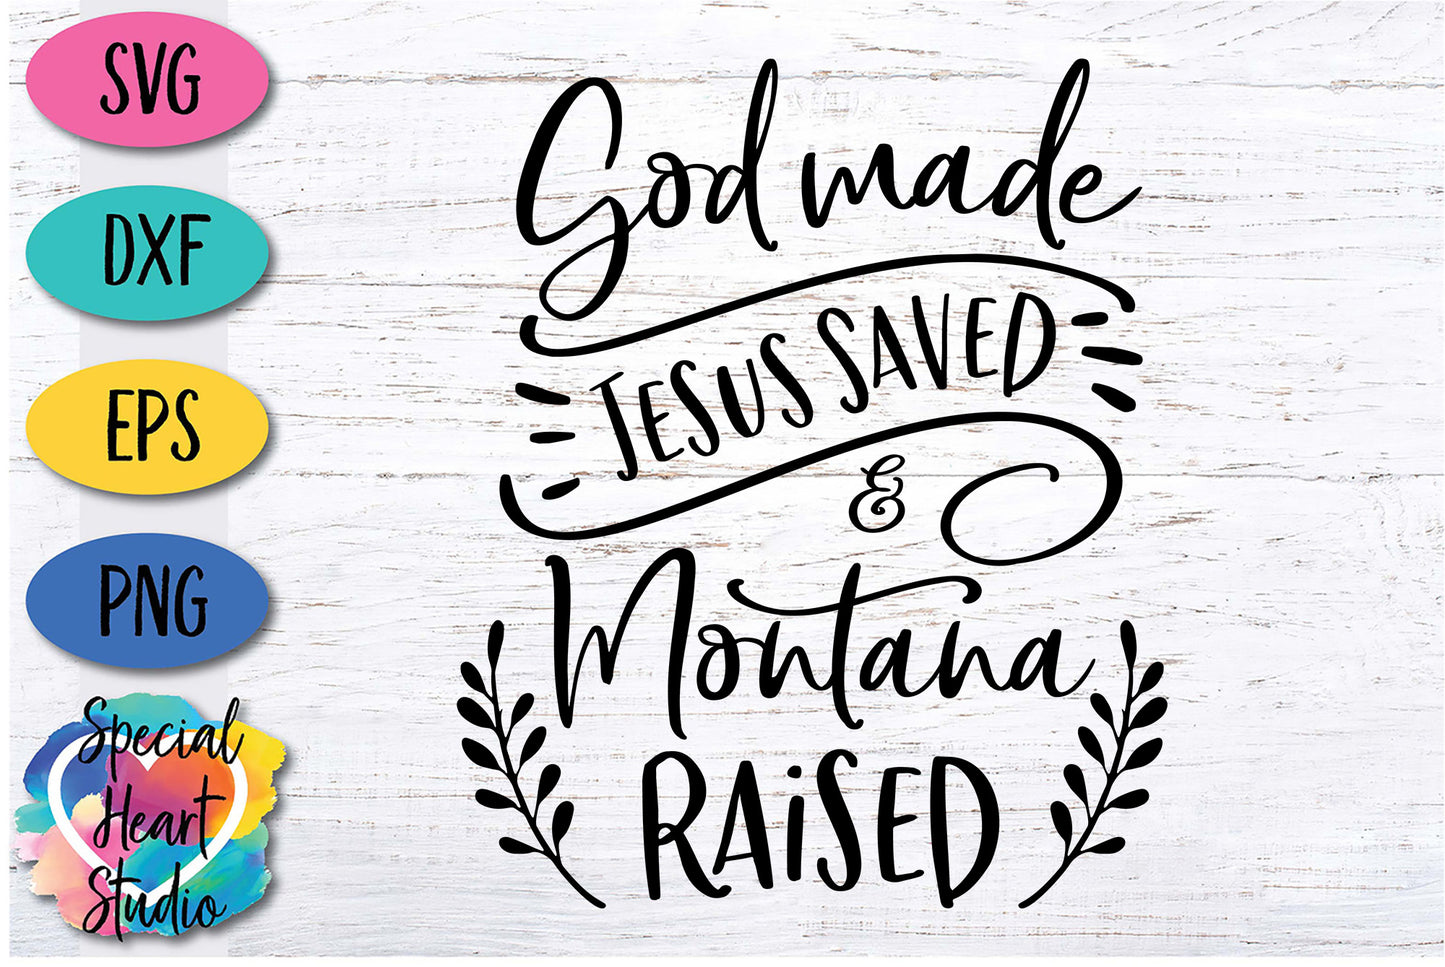 God Made, Jesus Saved and Montana Raised